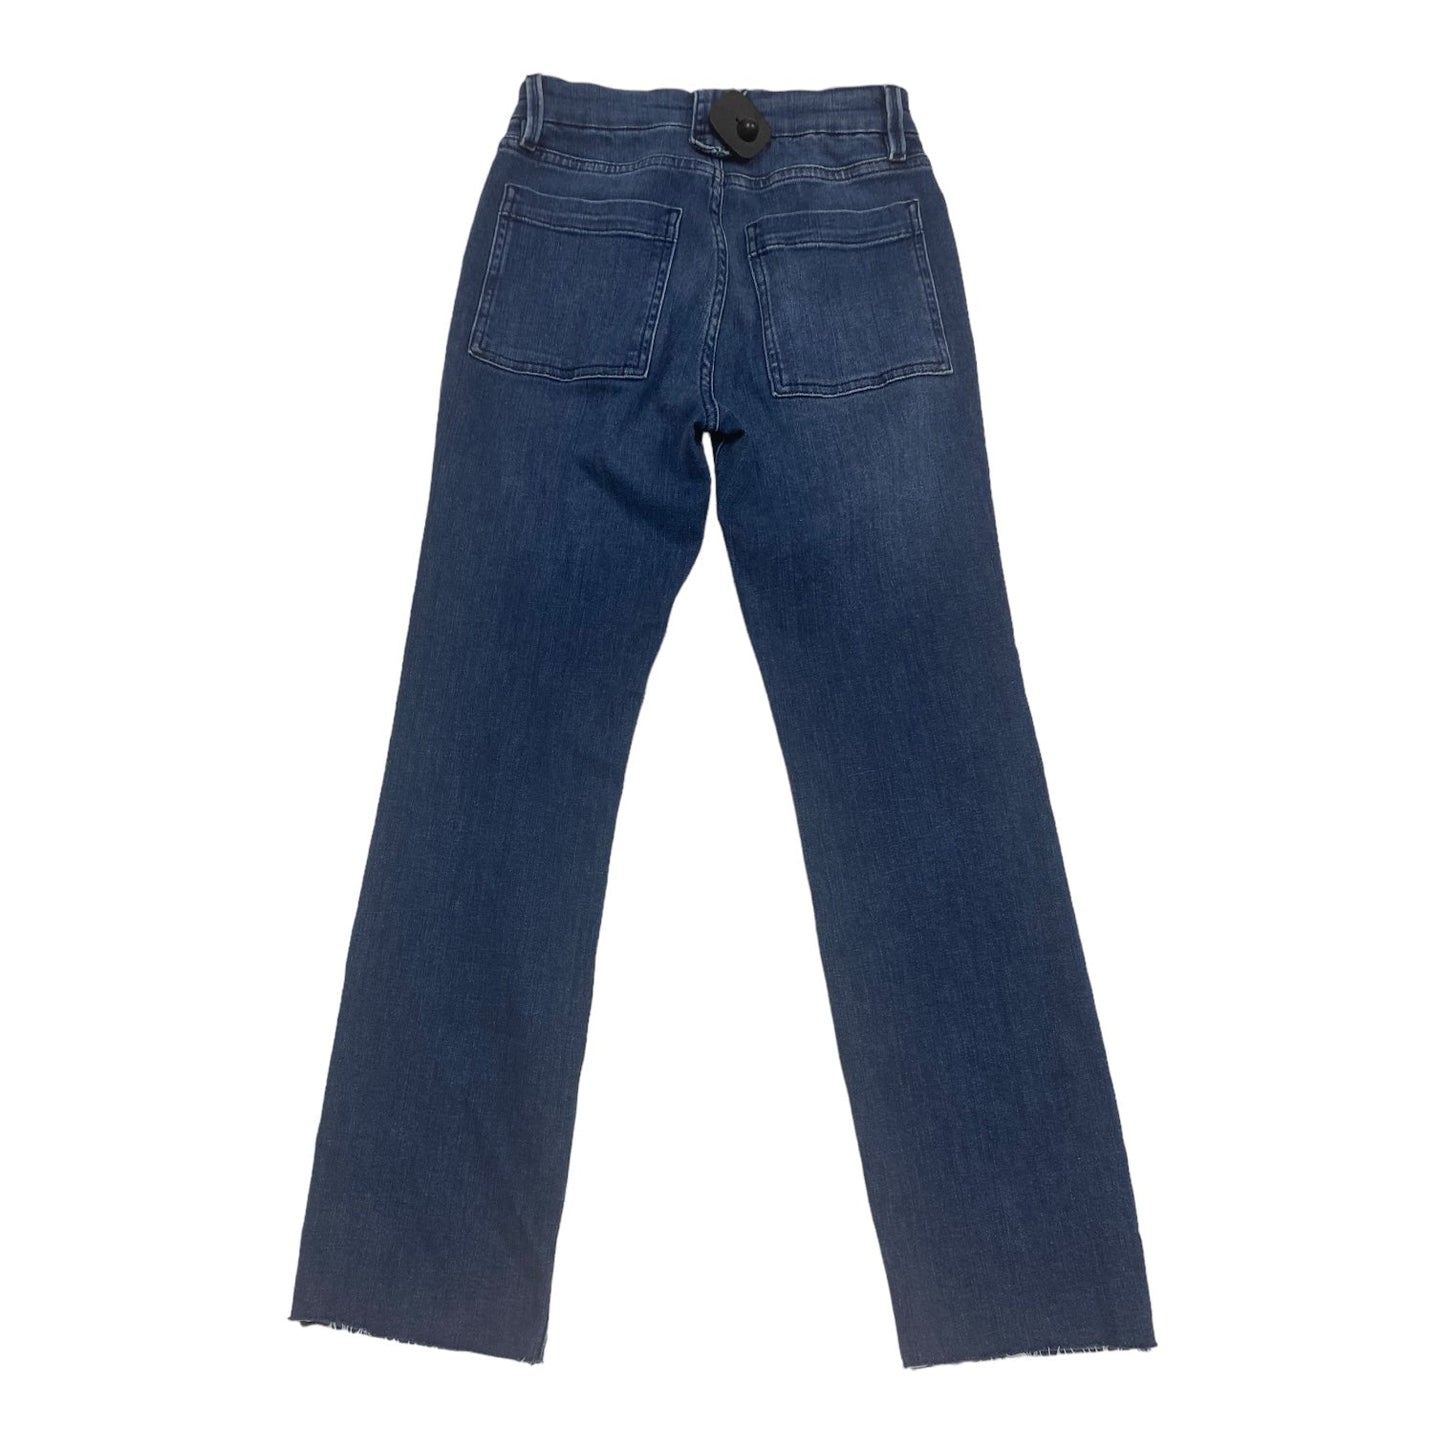 Blue Denim Jeans Straight Frame, Size 0